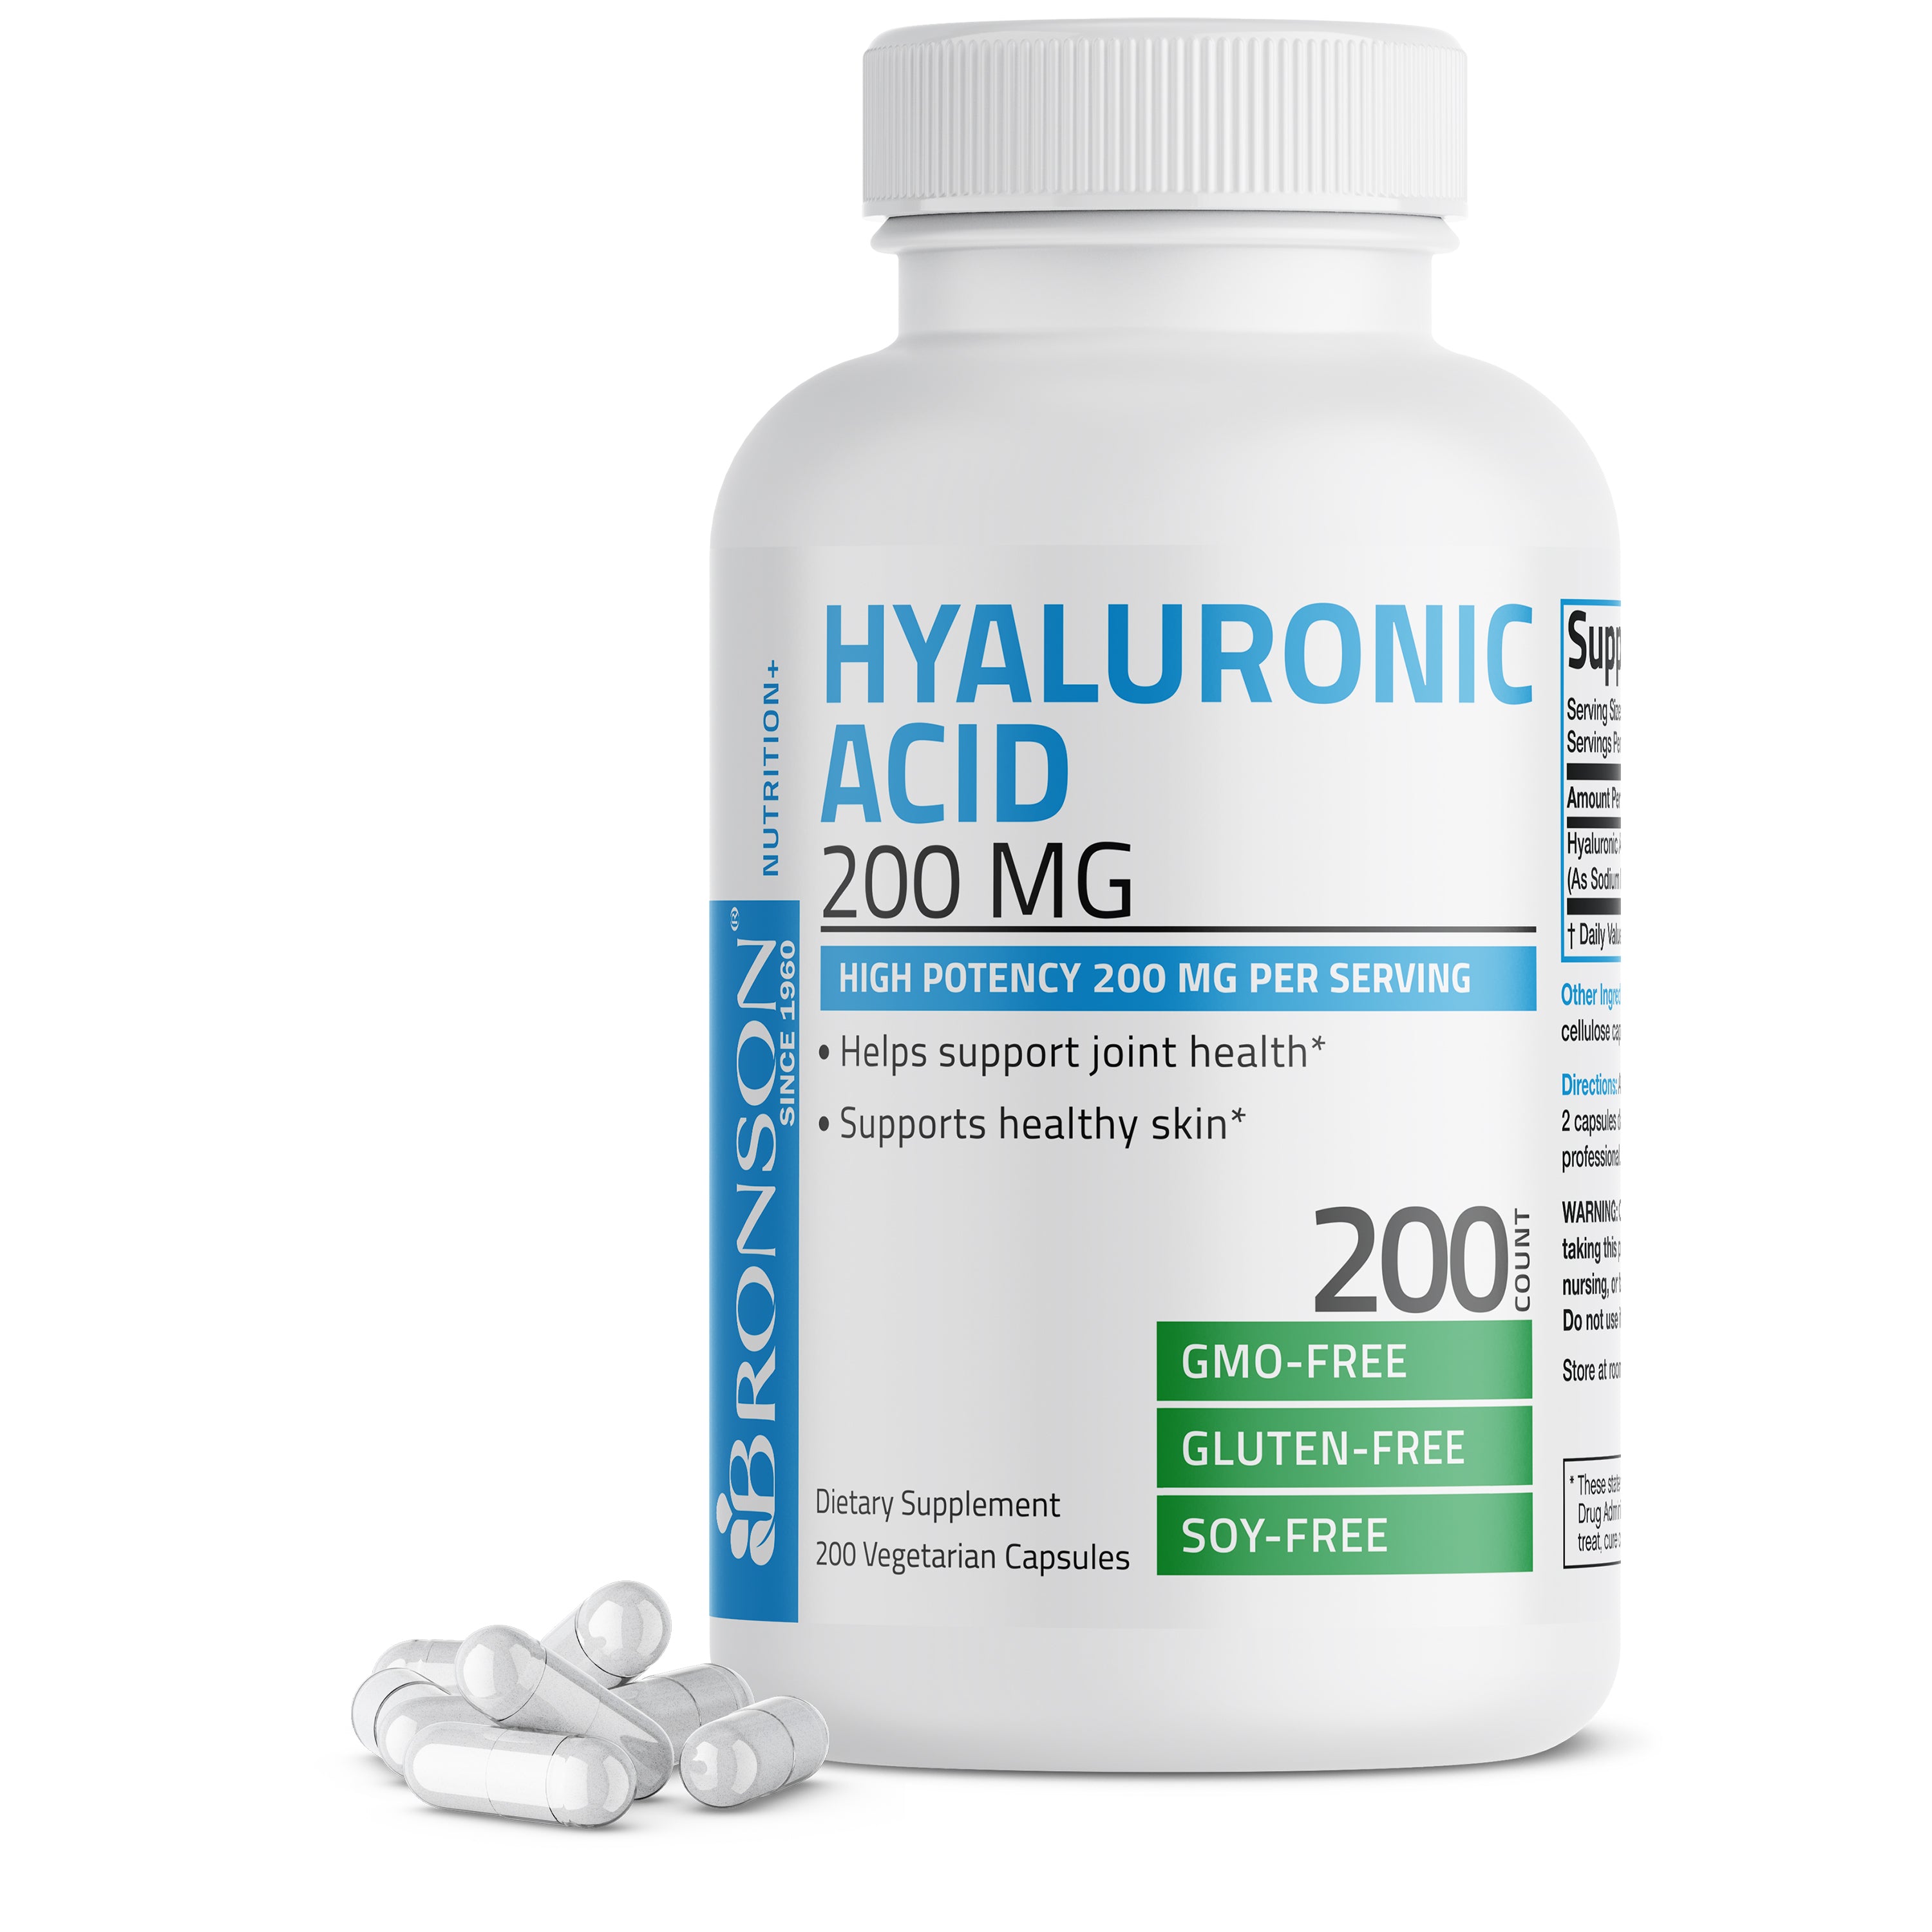 Hyaluronic Acid 200 MG, 200 Vegetarian Capsules view 1 of 6